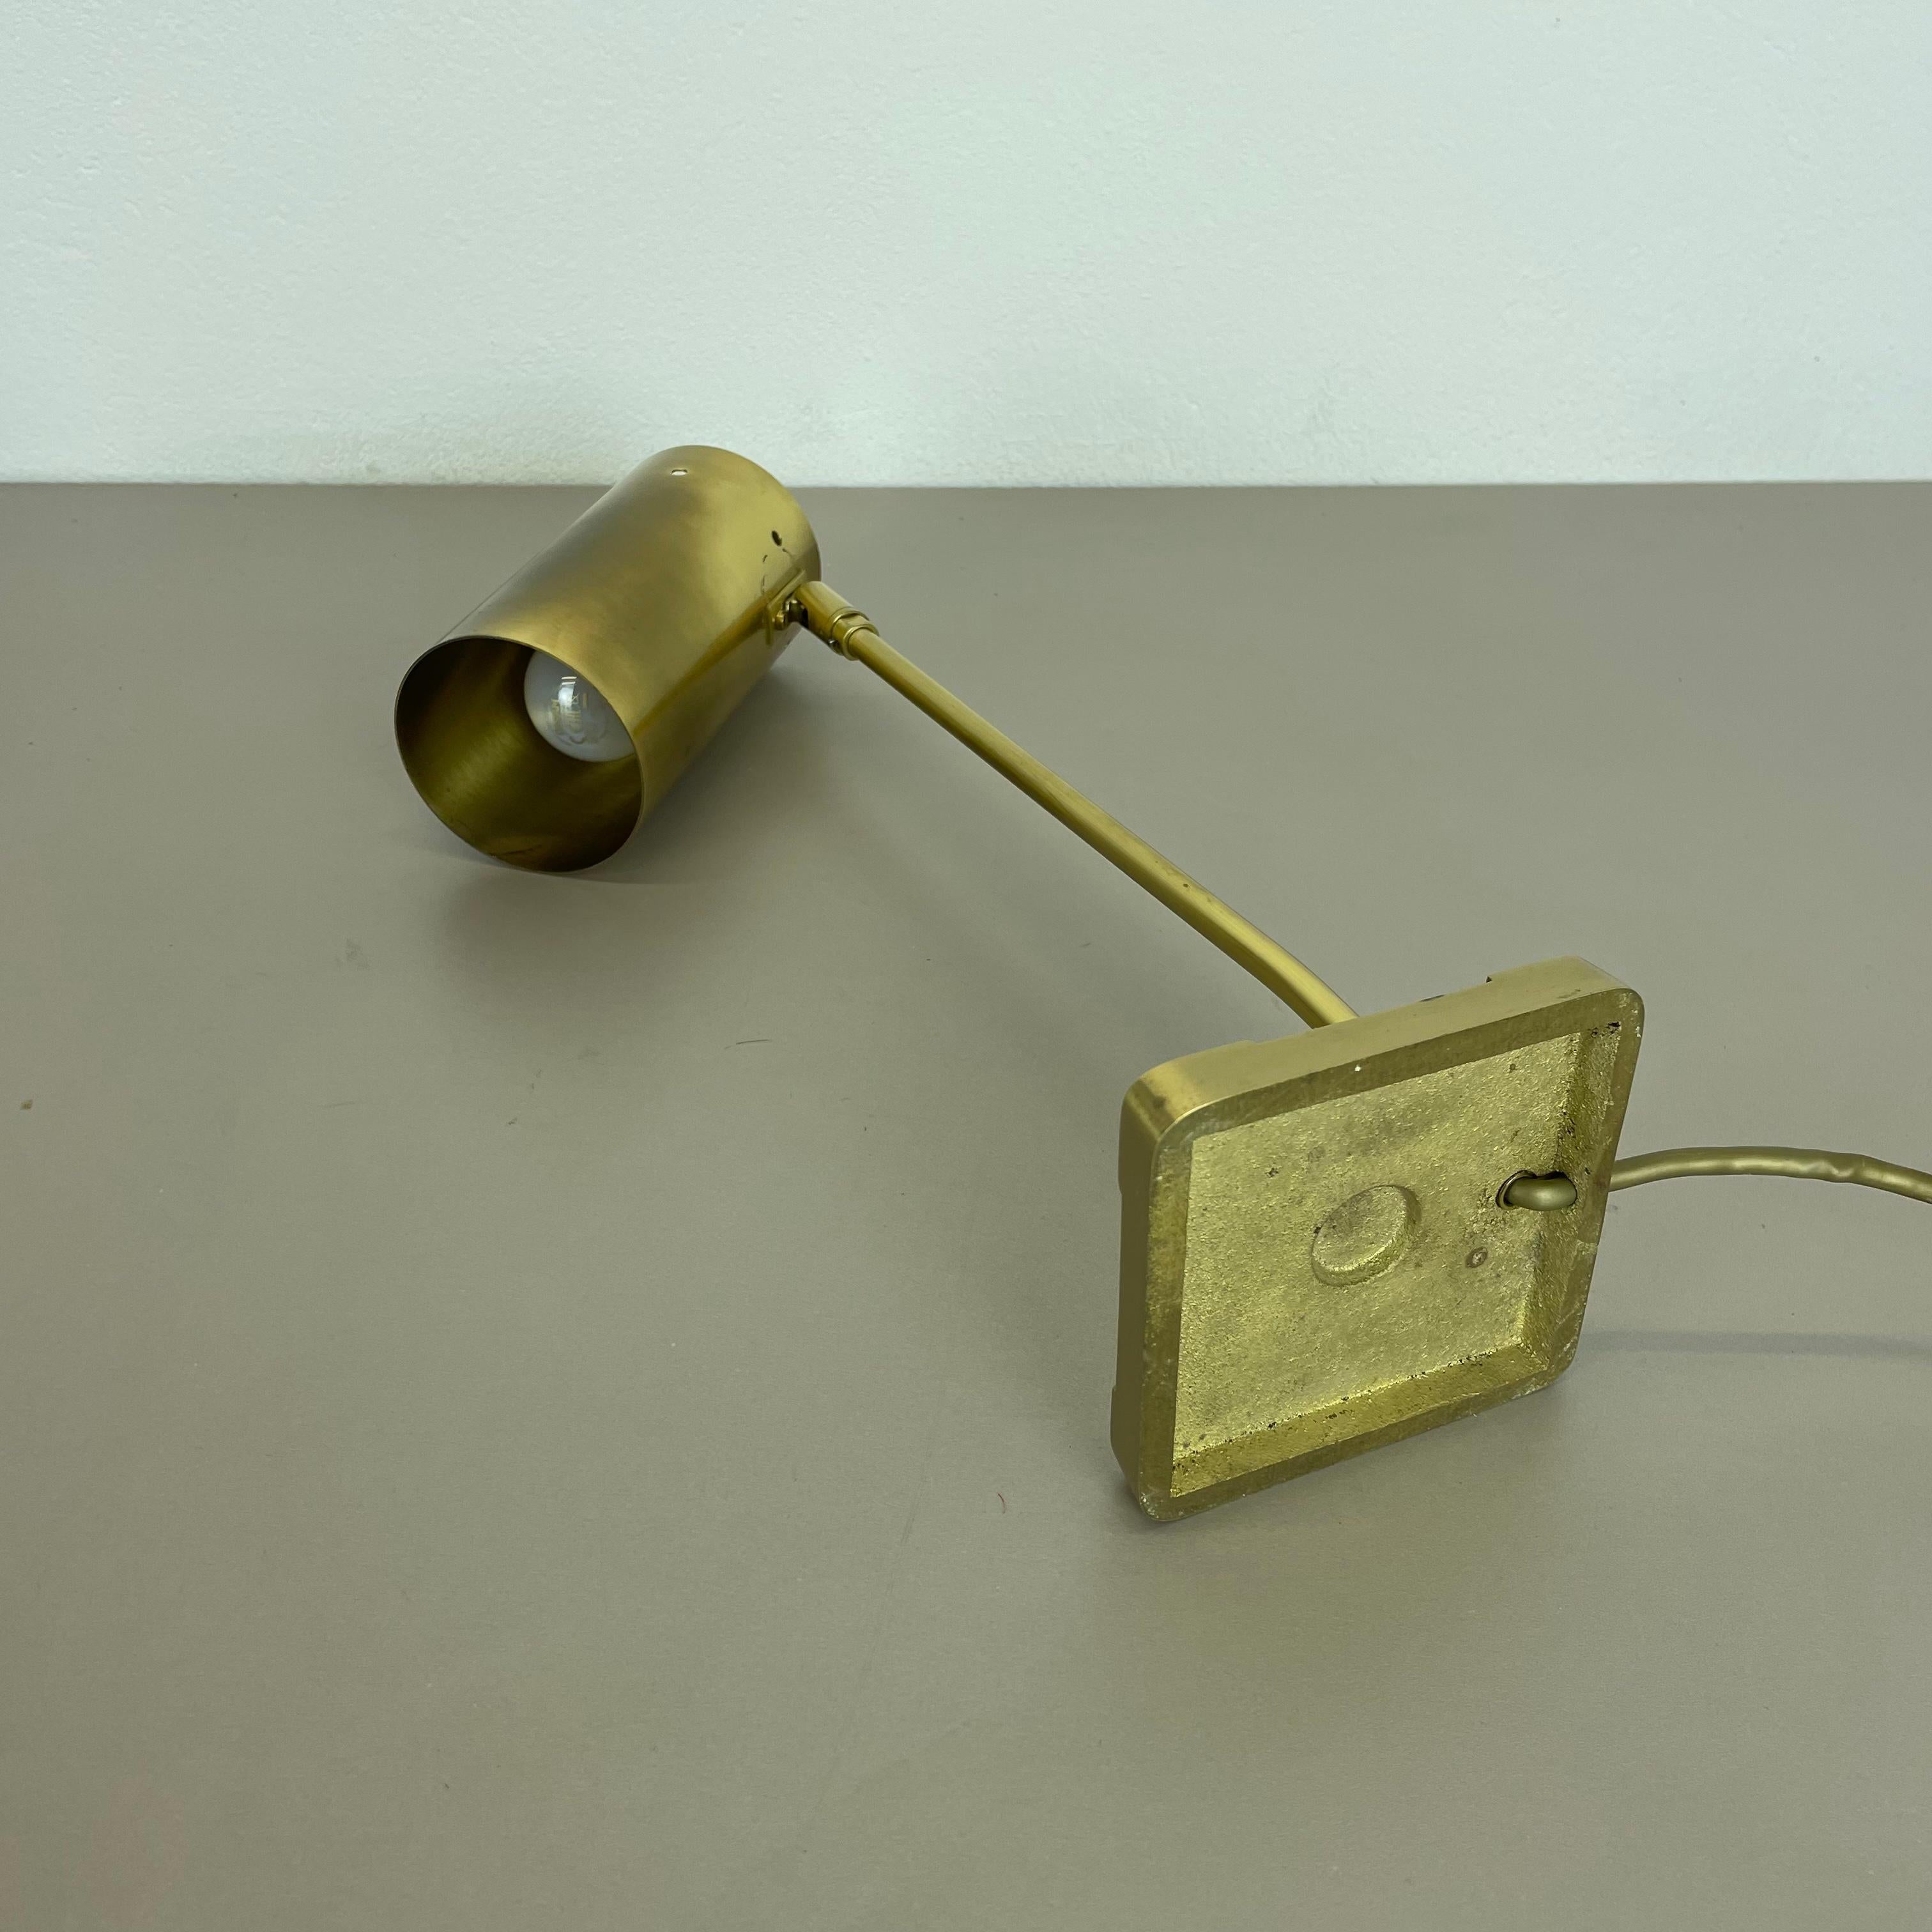 Original Hollywood Regency Stilnovo Style Brass Sputnik Table Light, Italy 1970s For Sale 9